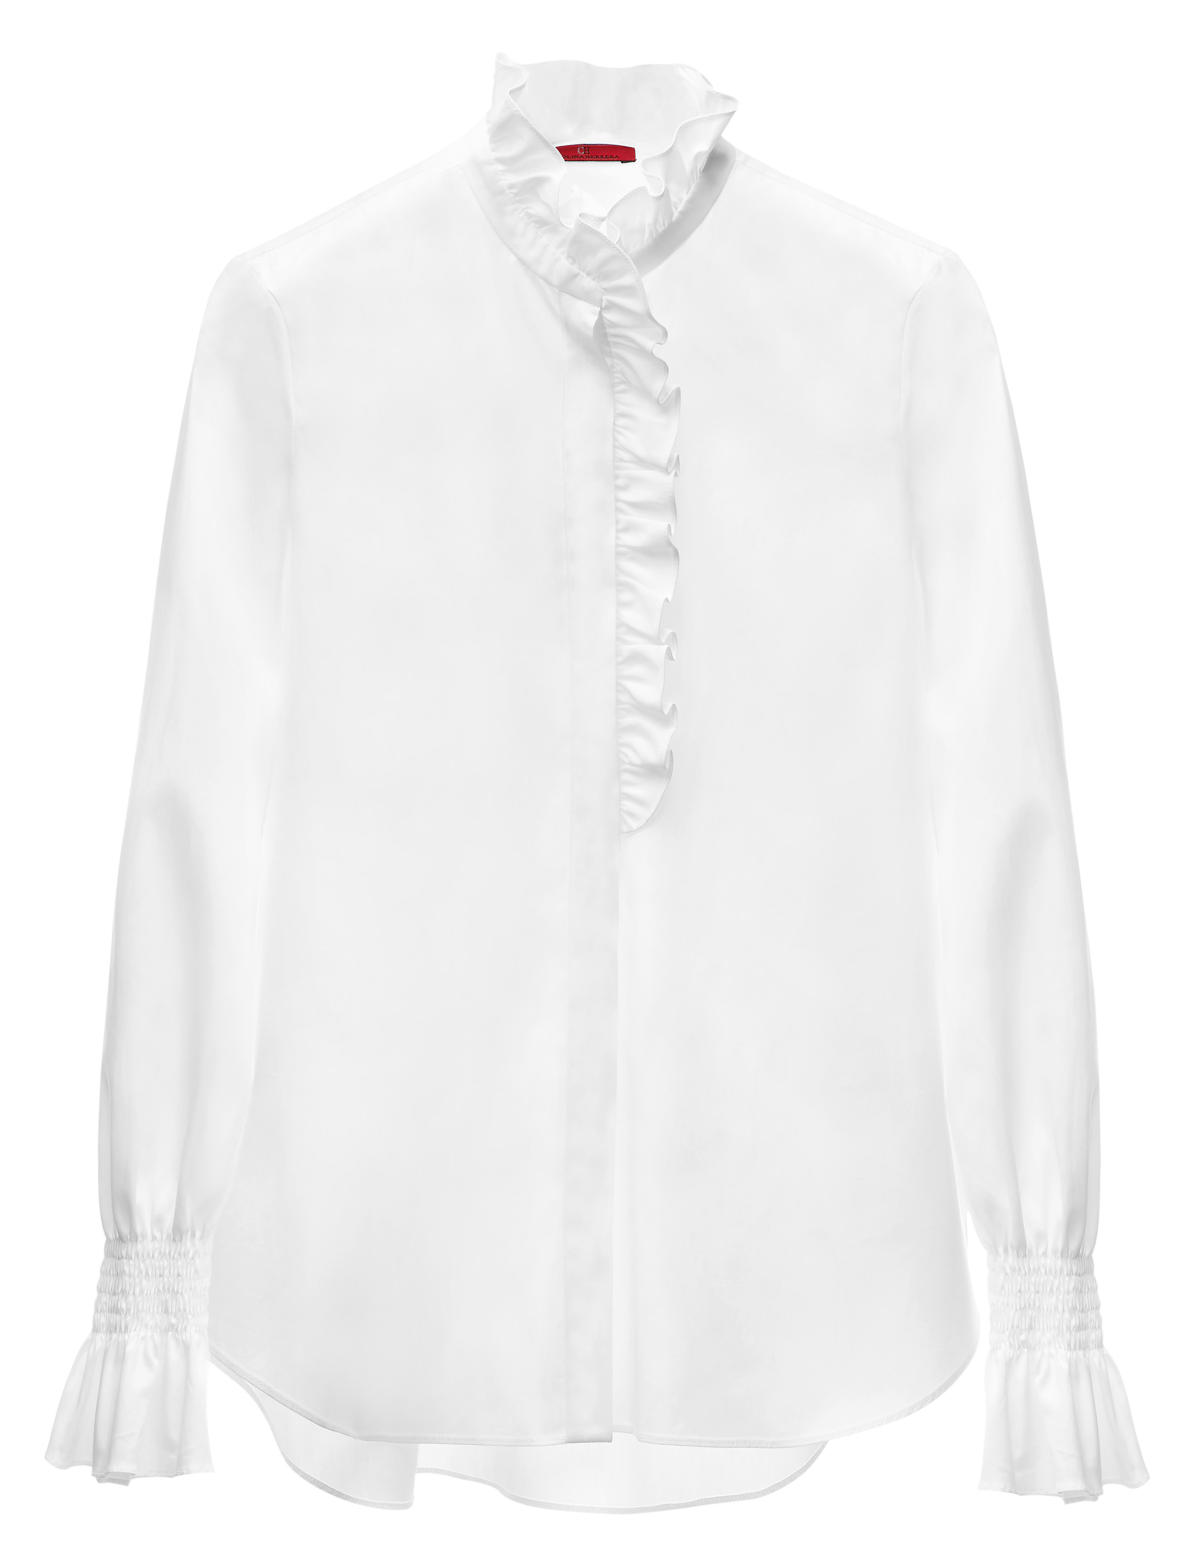 Trend Alert – Whitey-White Shirts